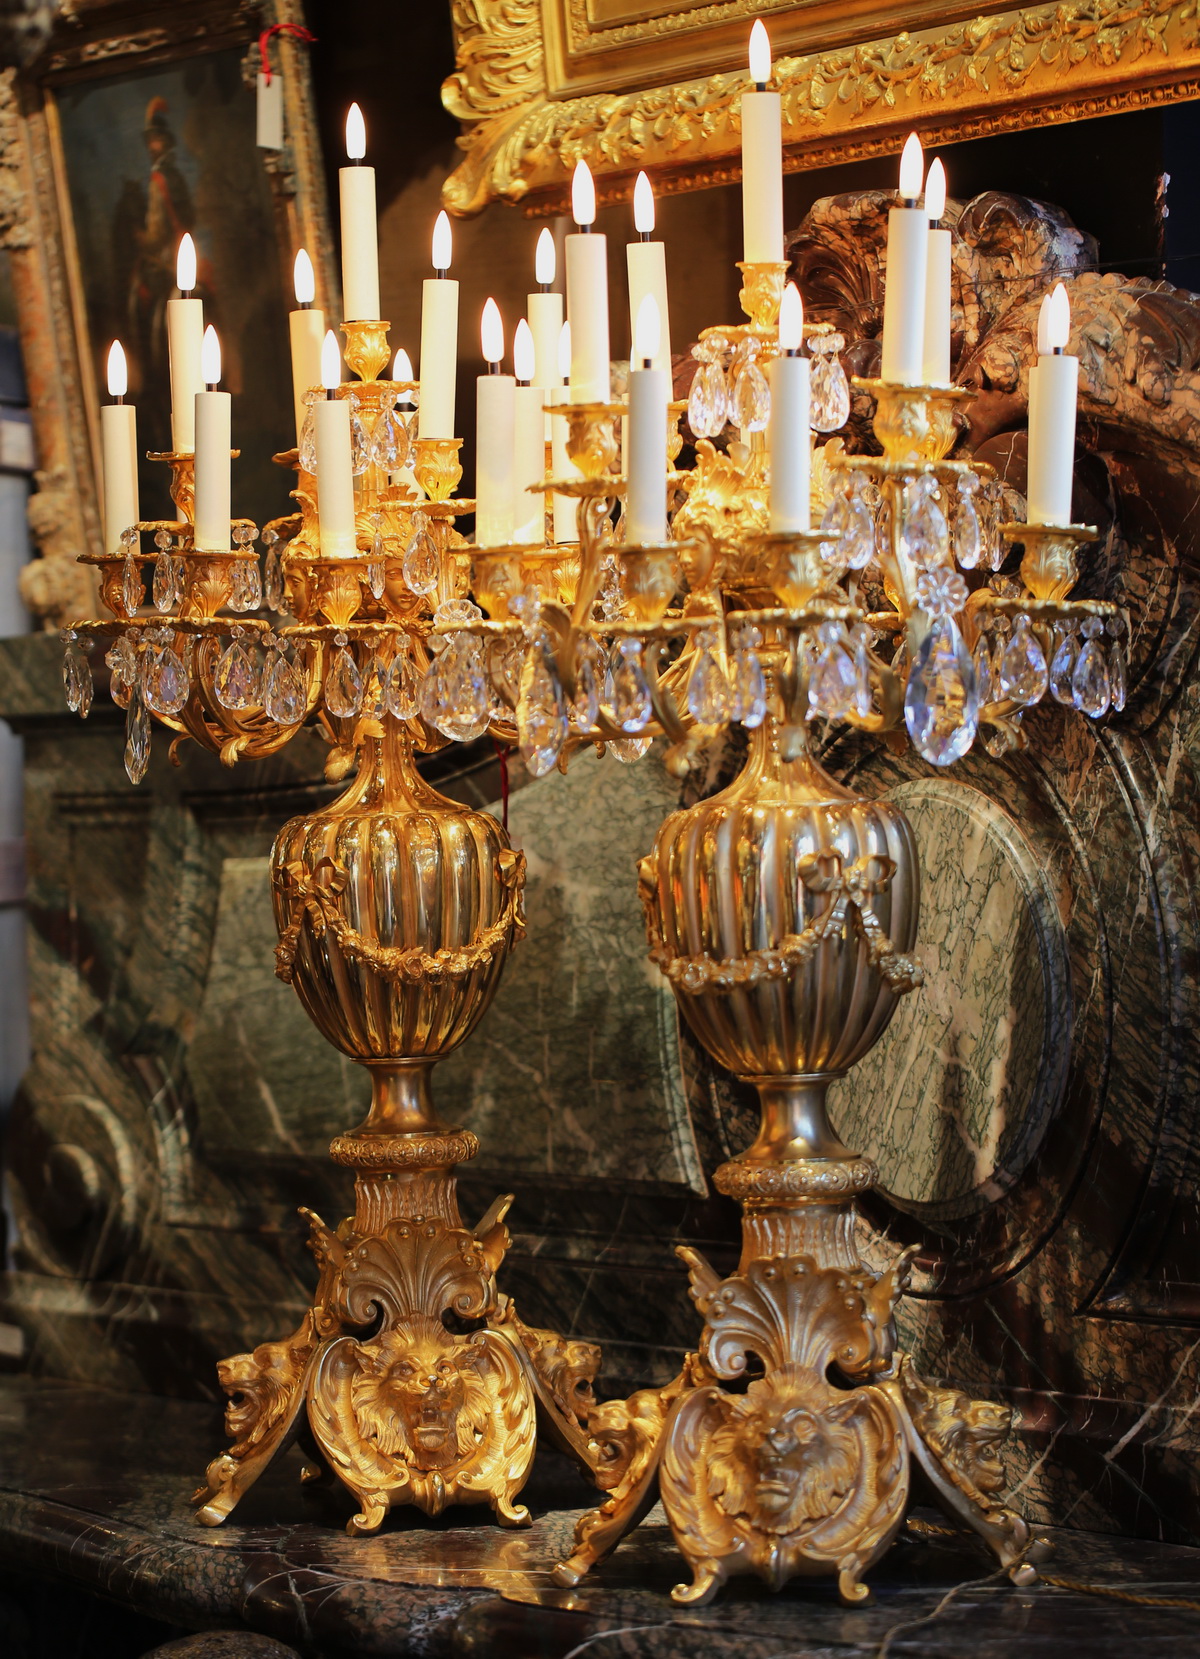 Pair of monumental candelabras circa 1850 